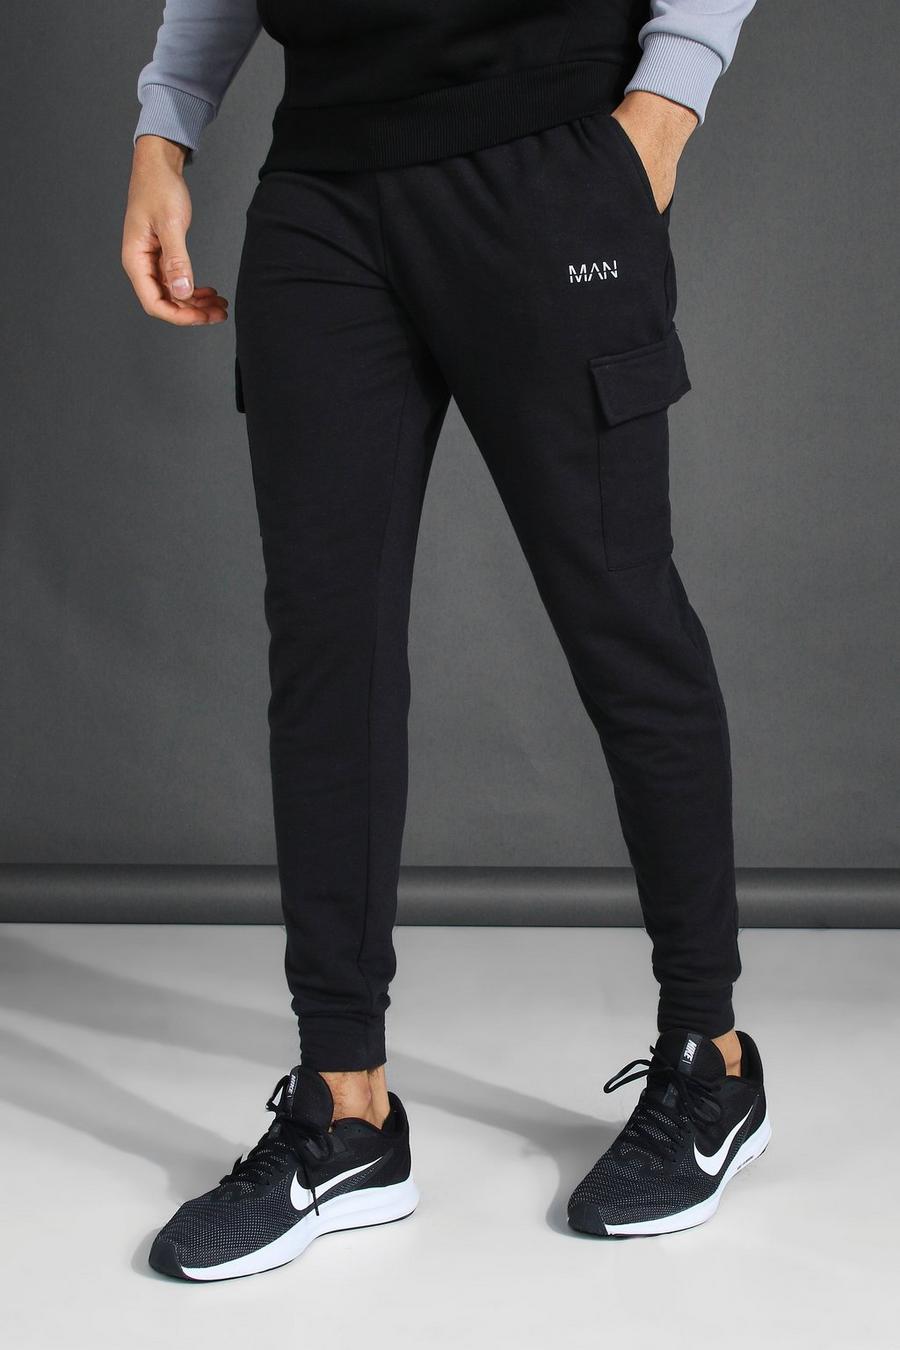 Pantaloni tuta MAN in stile cargo con coulisse, Nero negro image number 1